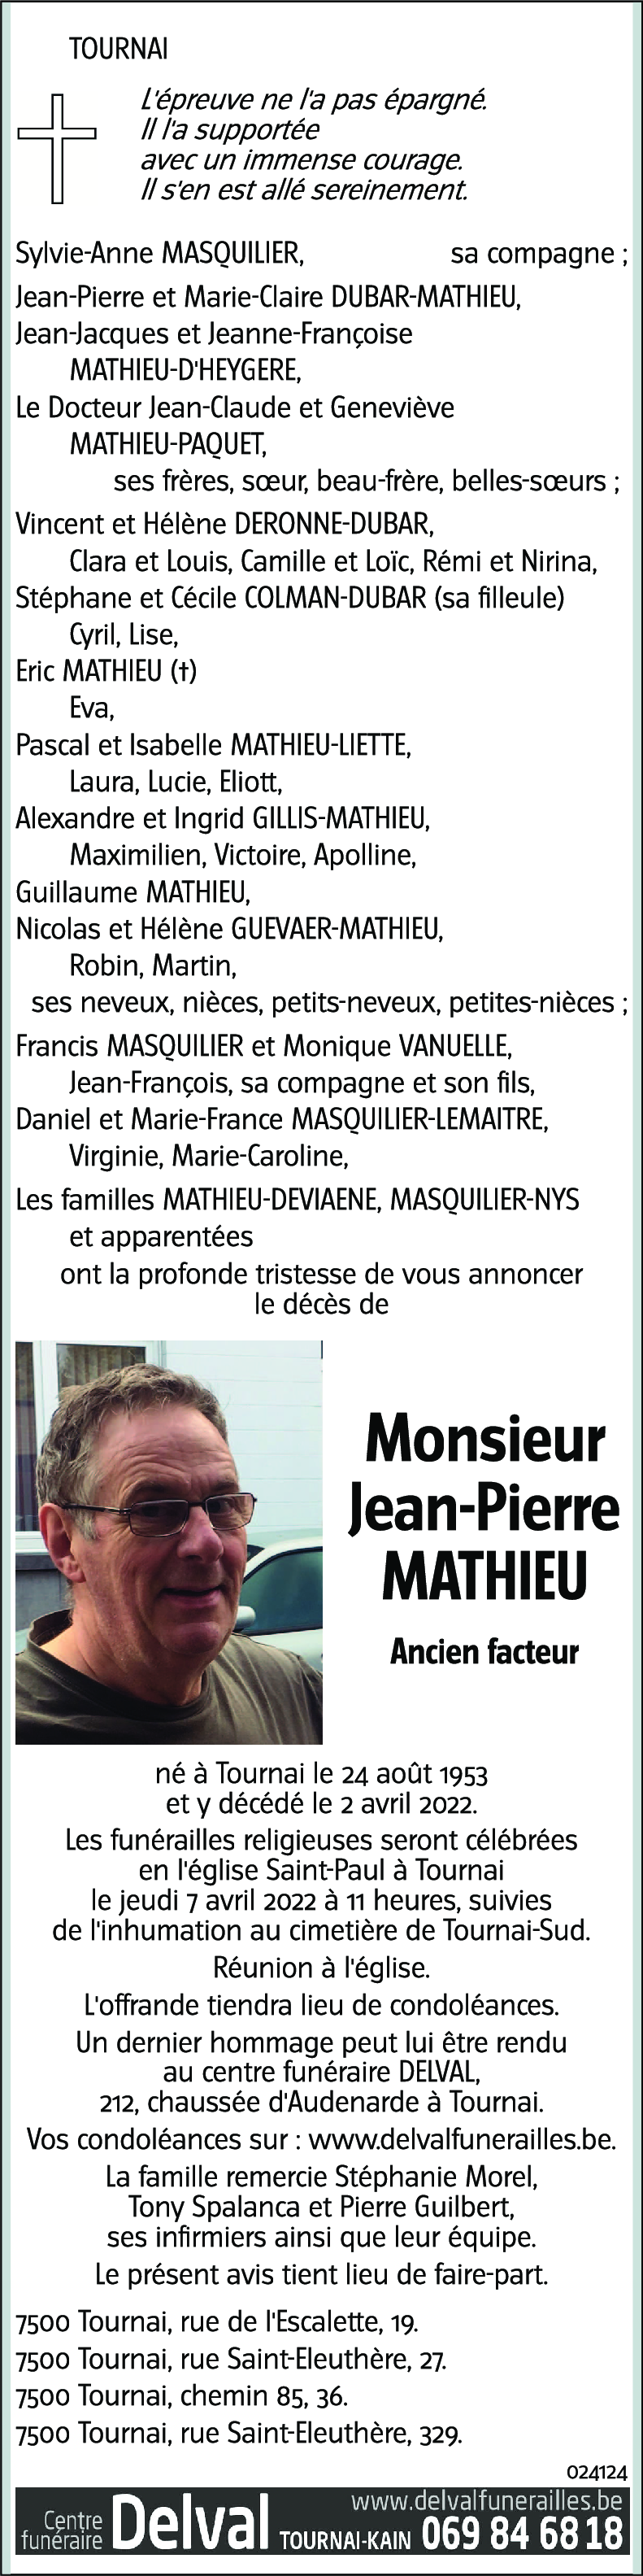 Jean-Pierre MATHIEU